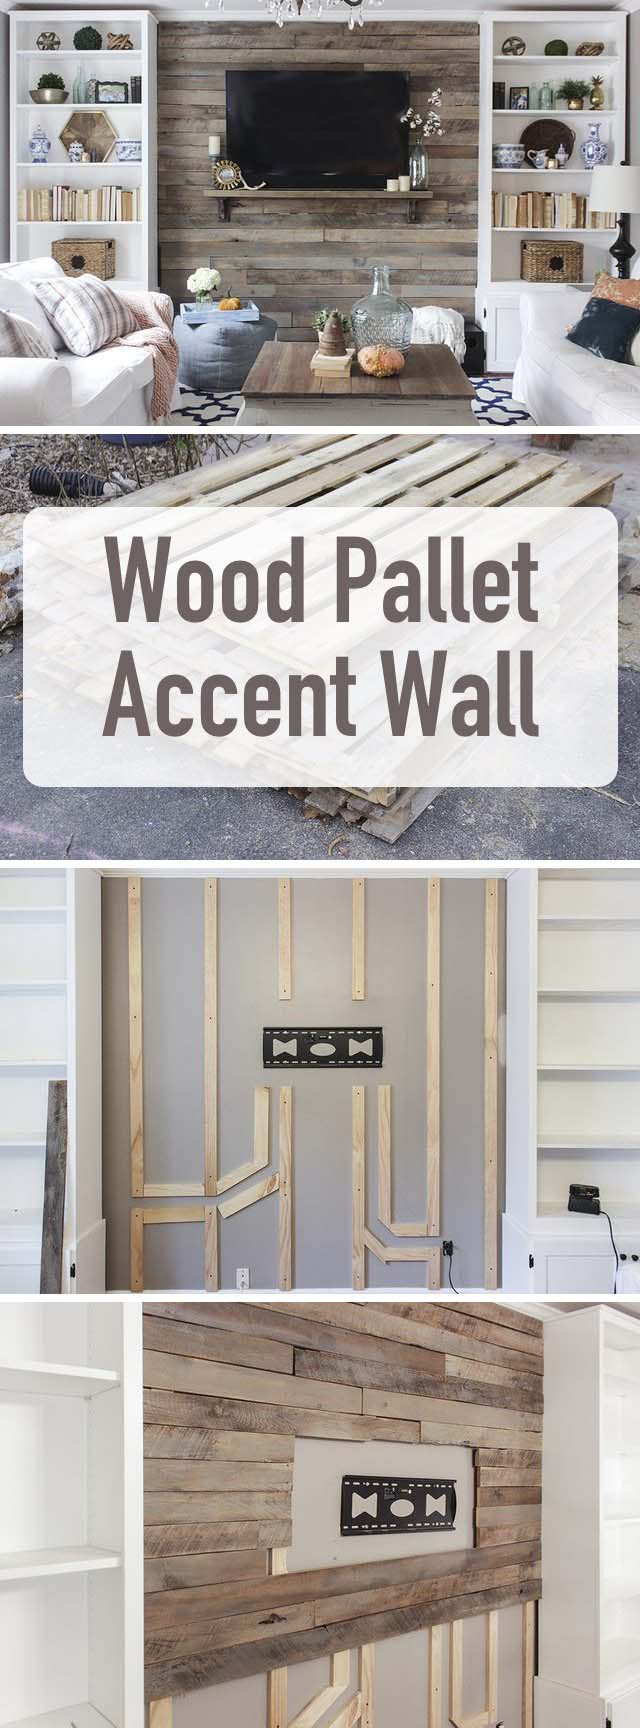 Create a Wood Pallet Accent Wall #decorhomeideas